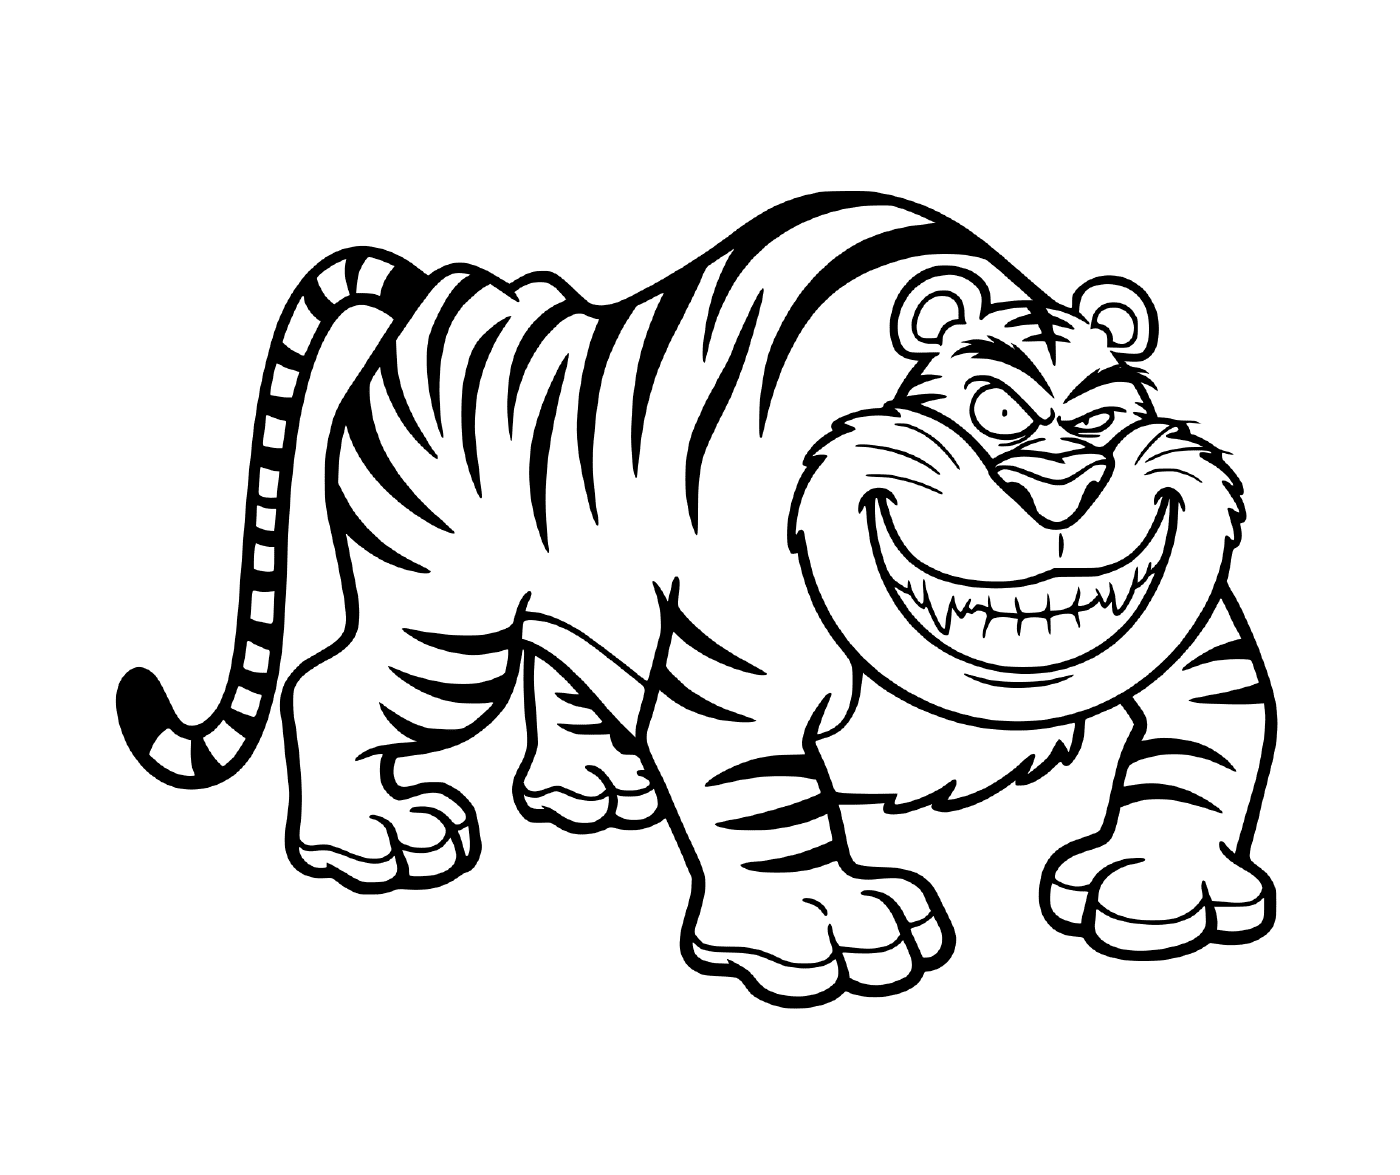  Забавный мультяшный тигр 